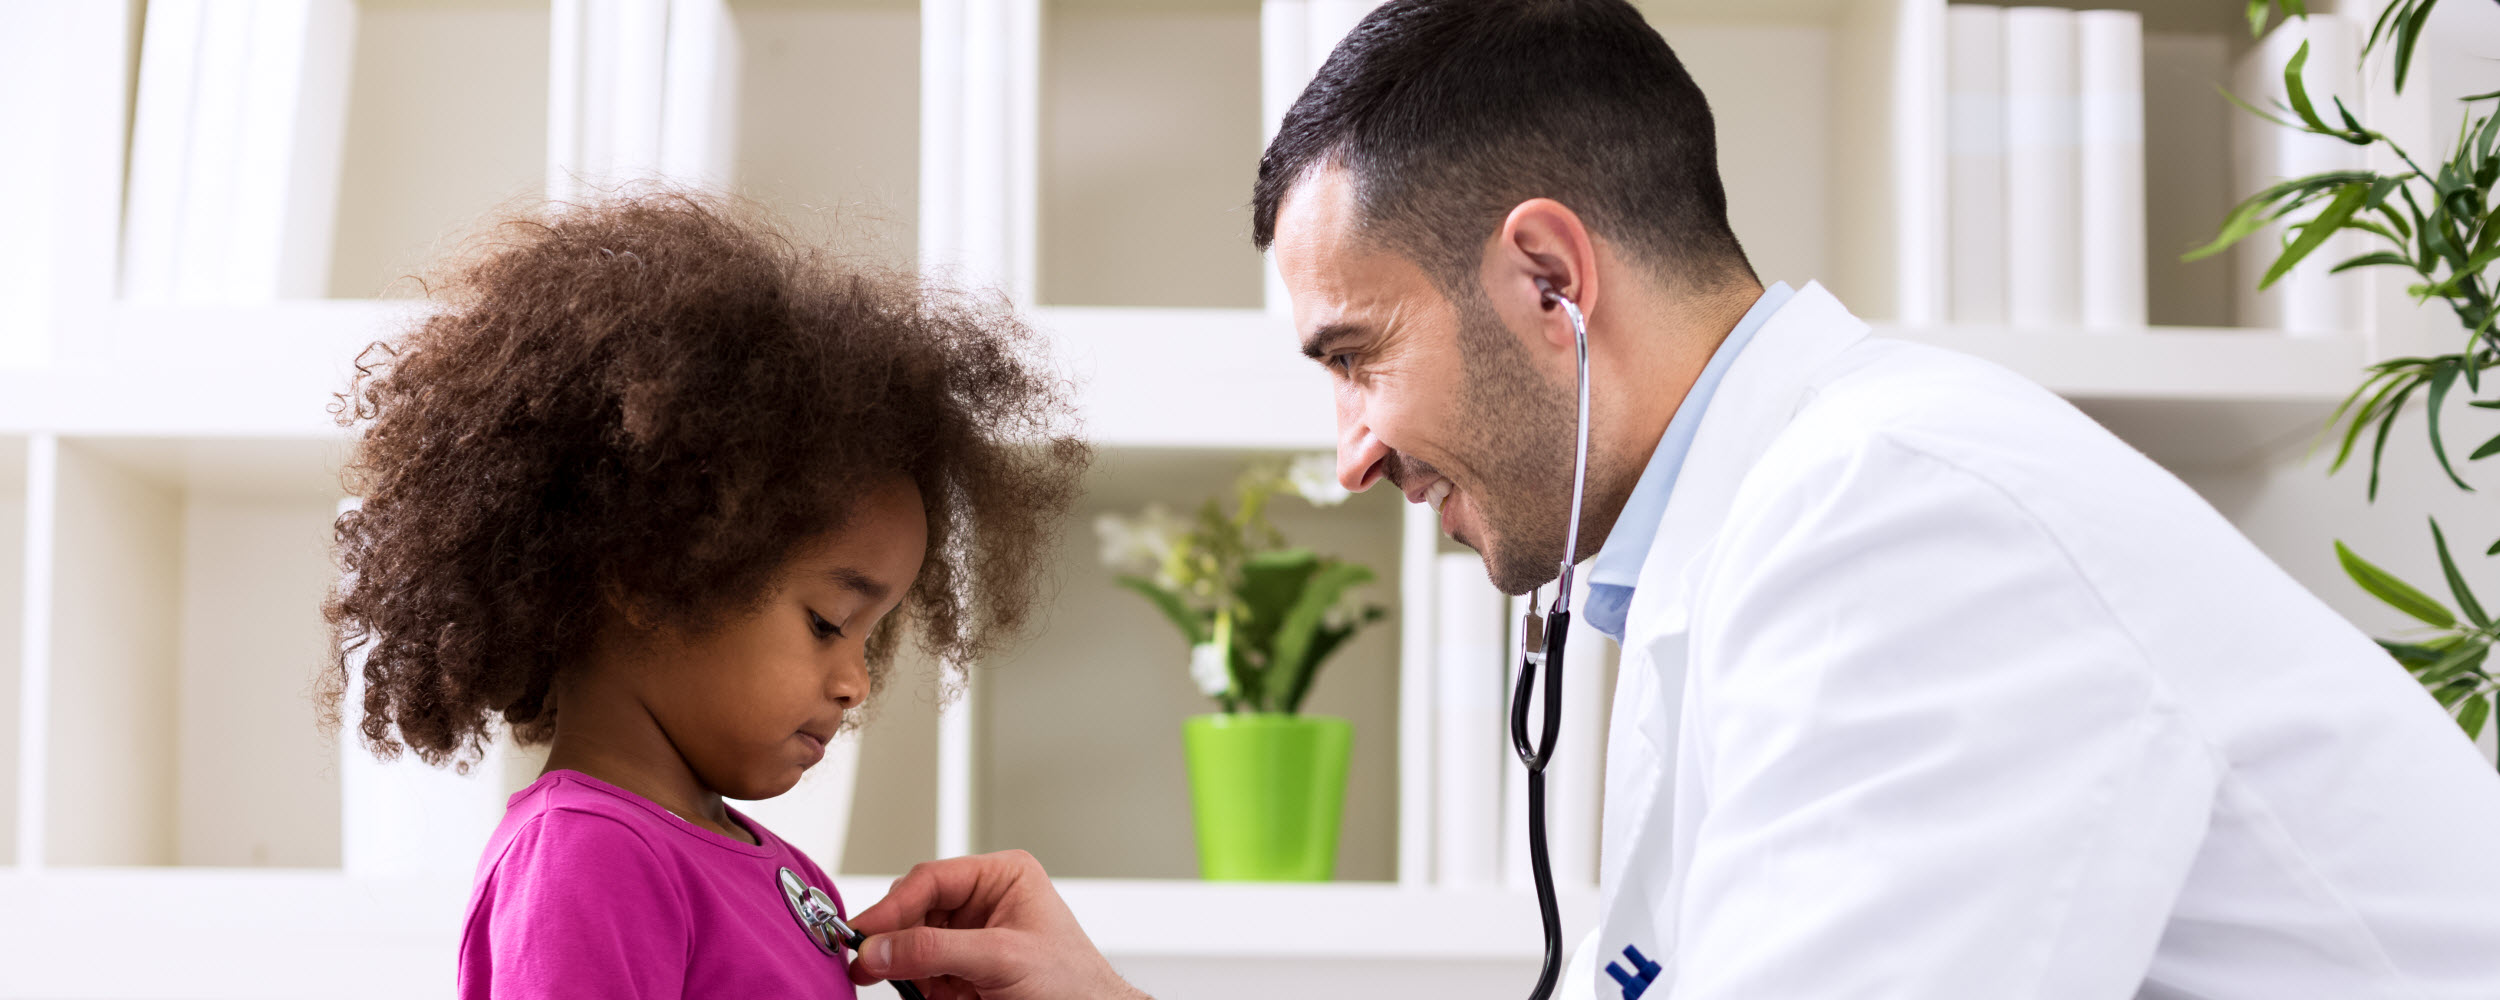 U.S. News & World Report 'Best Children's Hospitals' ranking released RTI